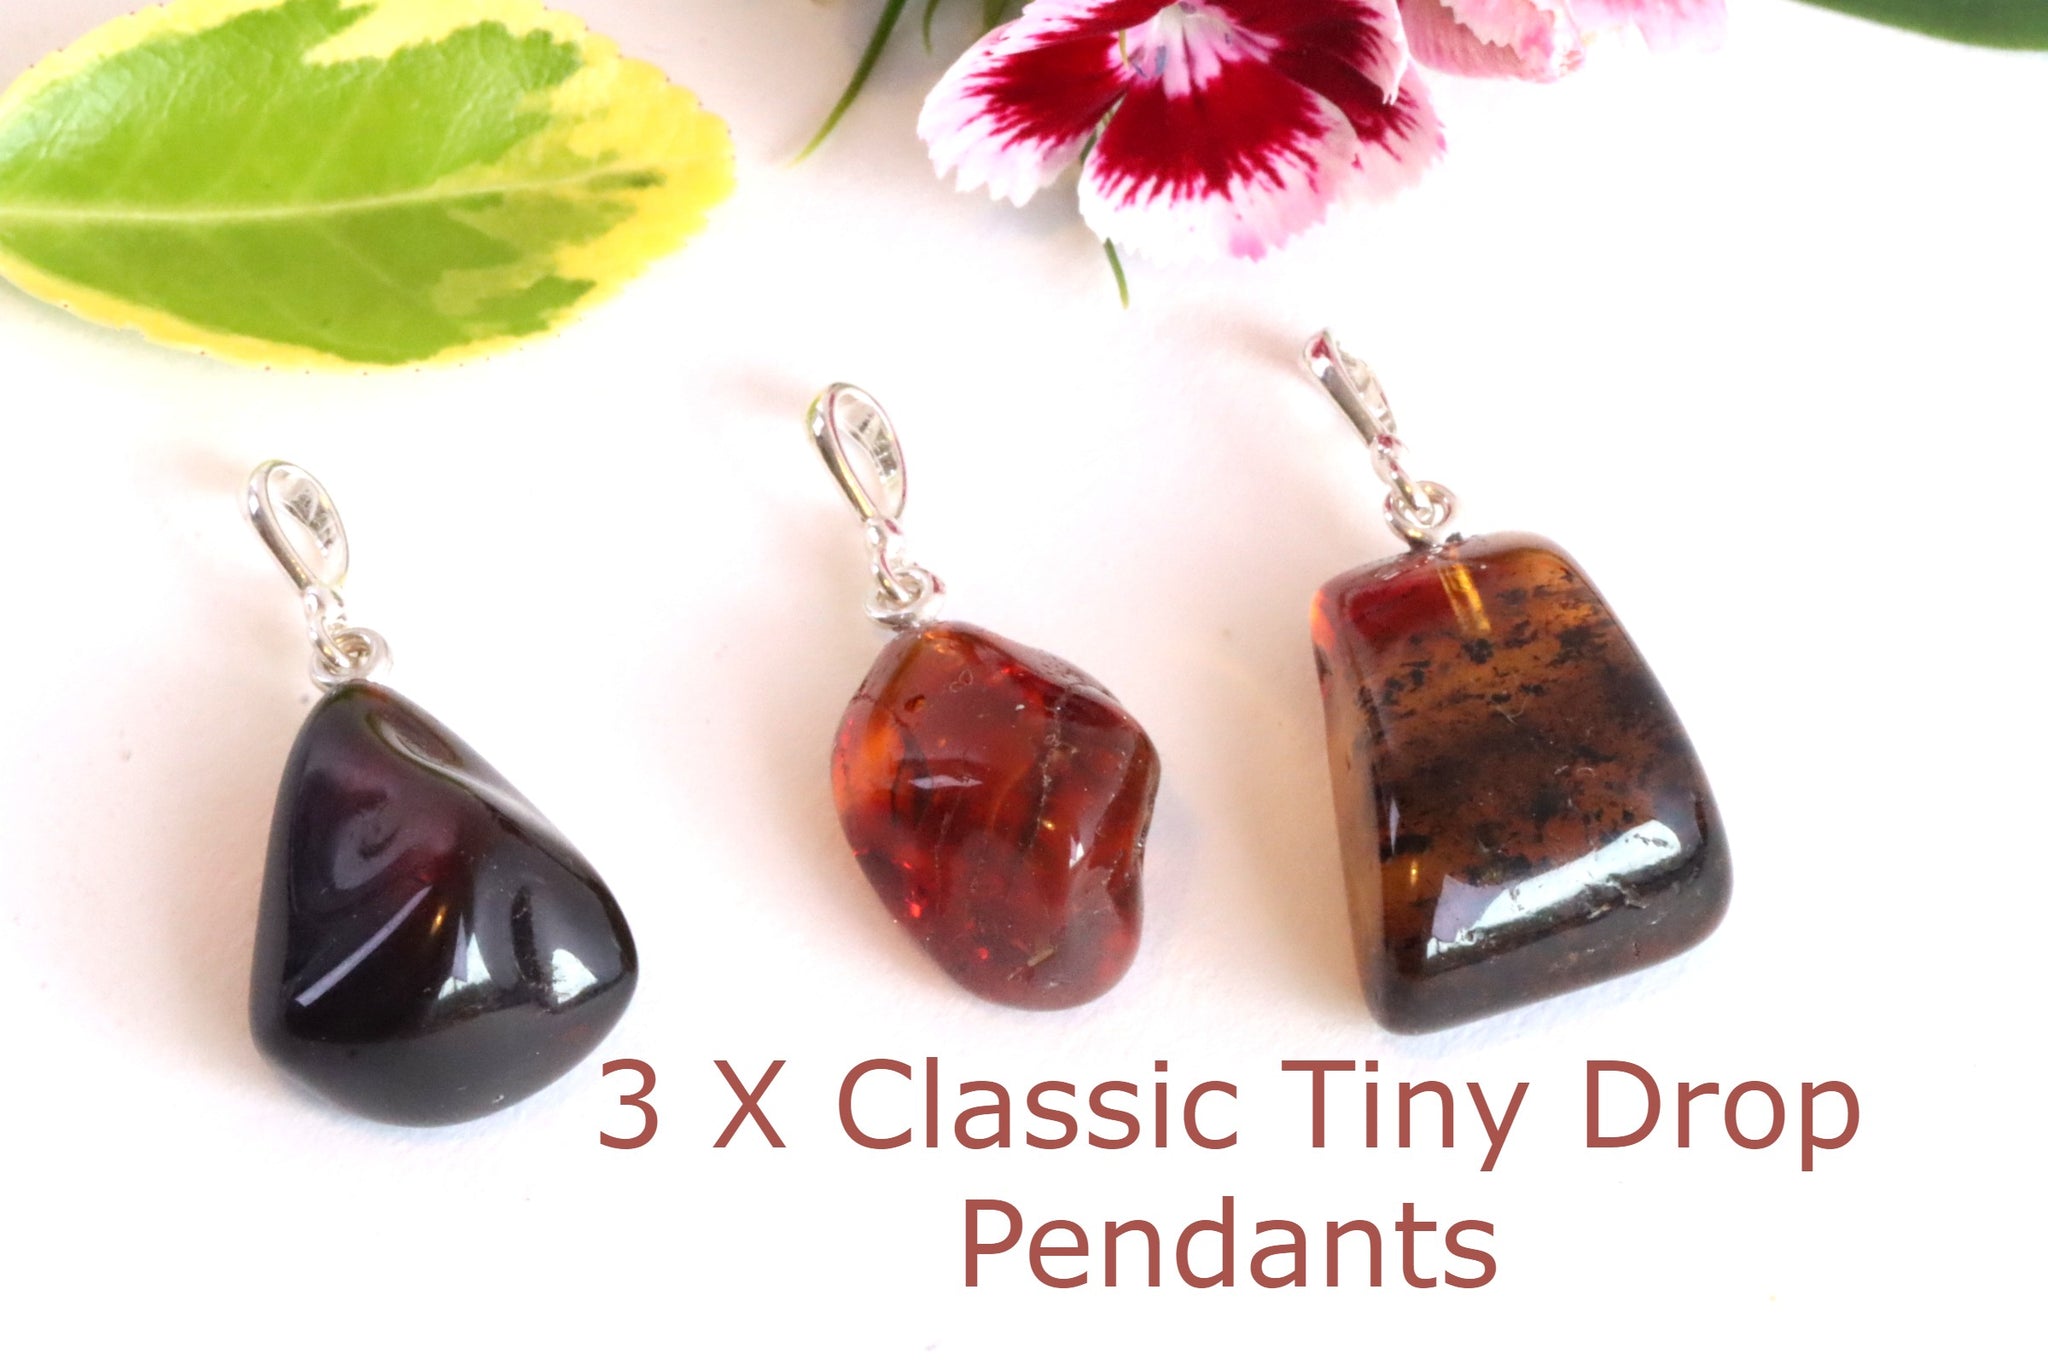 3 X Classic Tiny Drop Pendants